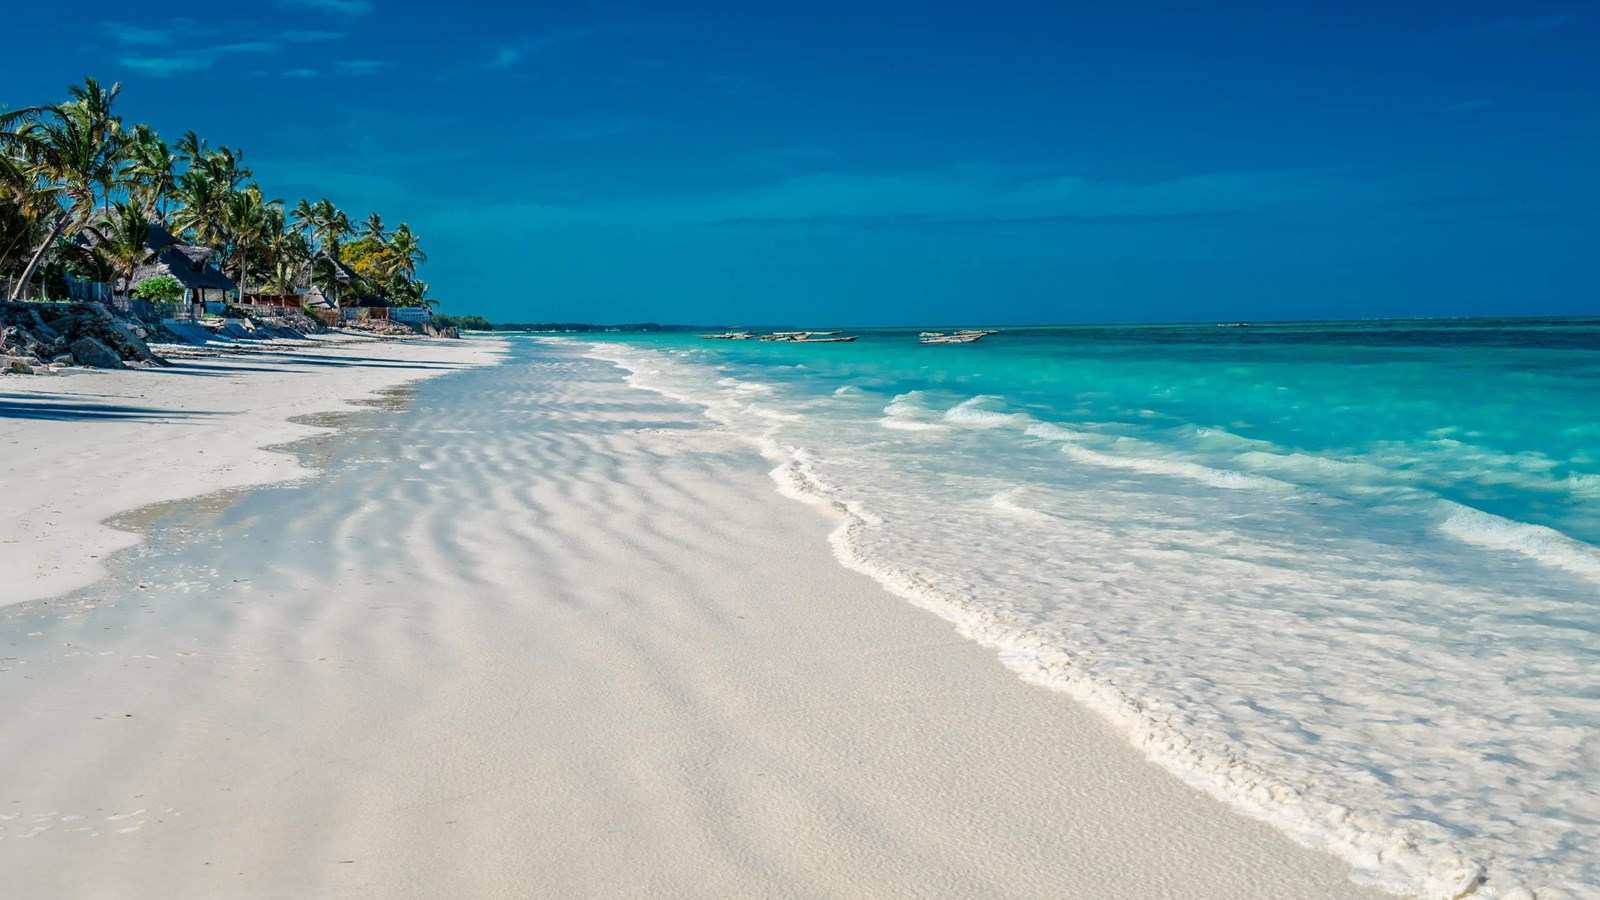 Explore the best of Zanzibar